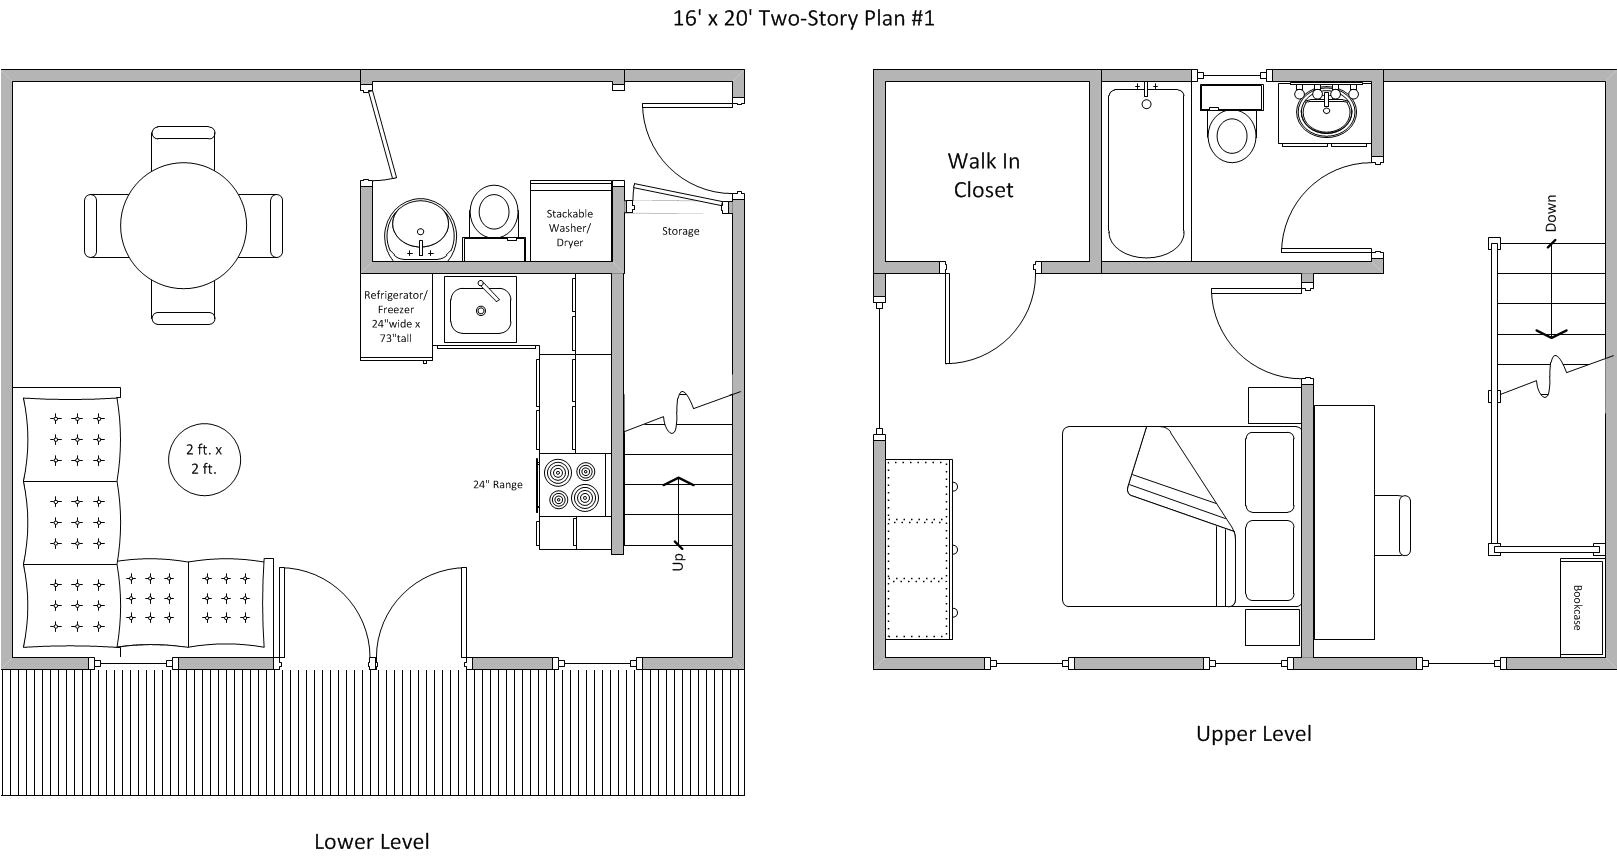 Planned walks. Micro House Plans. Стильный дизайн план схема базы отдыха. Plans 2nd Floor 20x10 Meters. Plan 1 story.